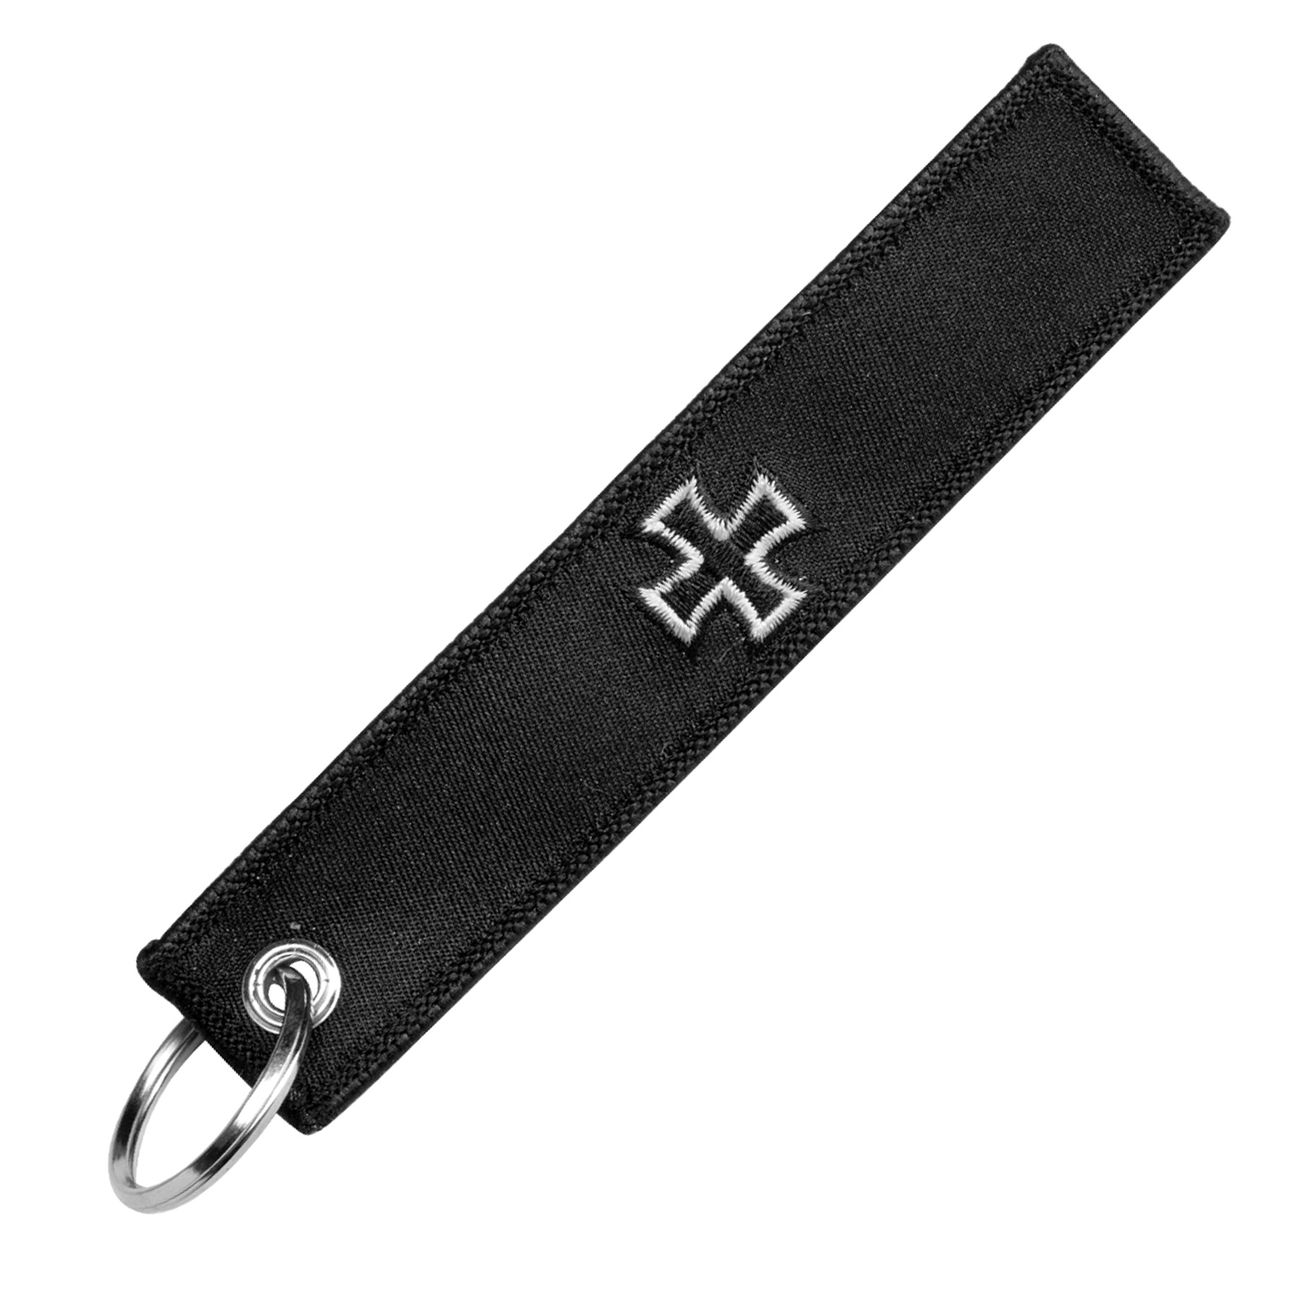 Schlüsselanhänger Eisernes Kreuz EK Bundeswehr